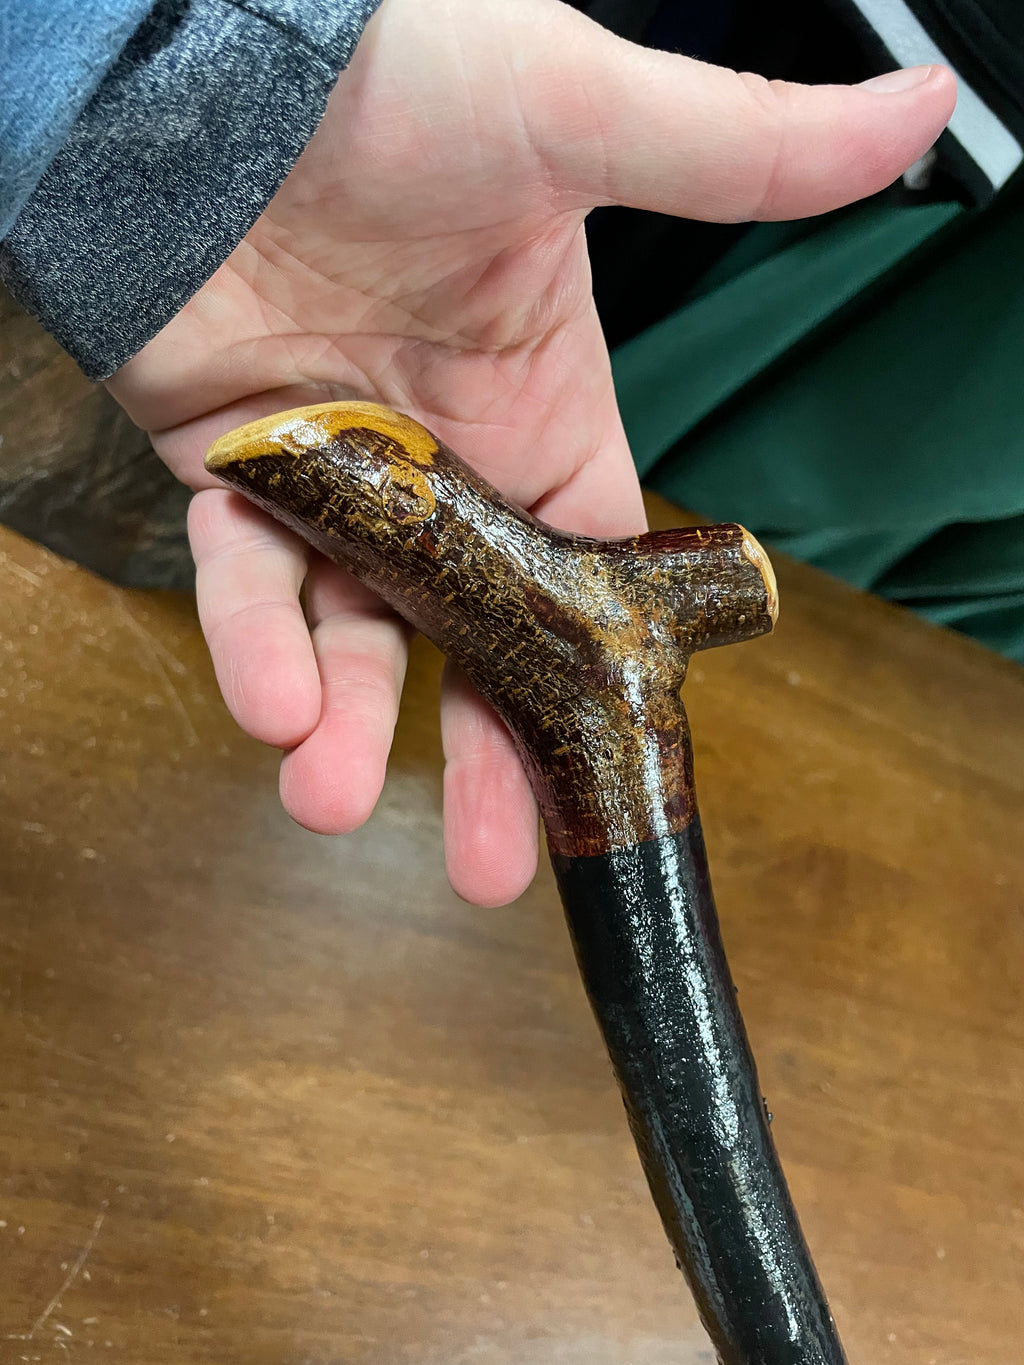 Blackthorn Walking Stick 38 inch  - Handmade in Irelan